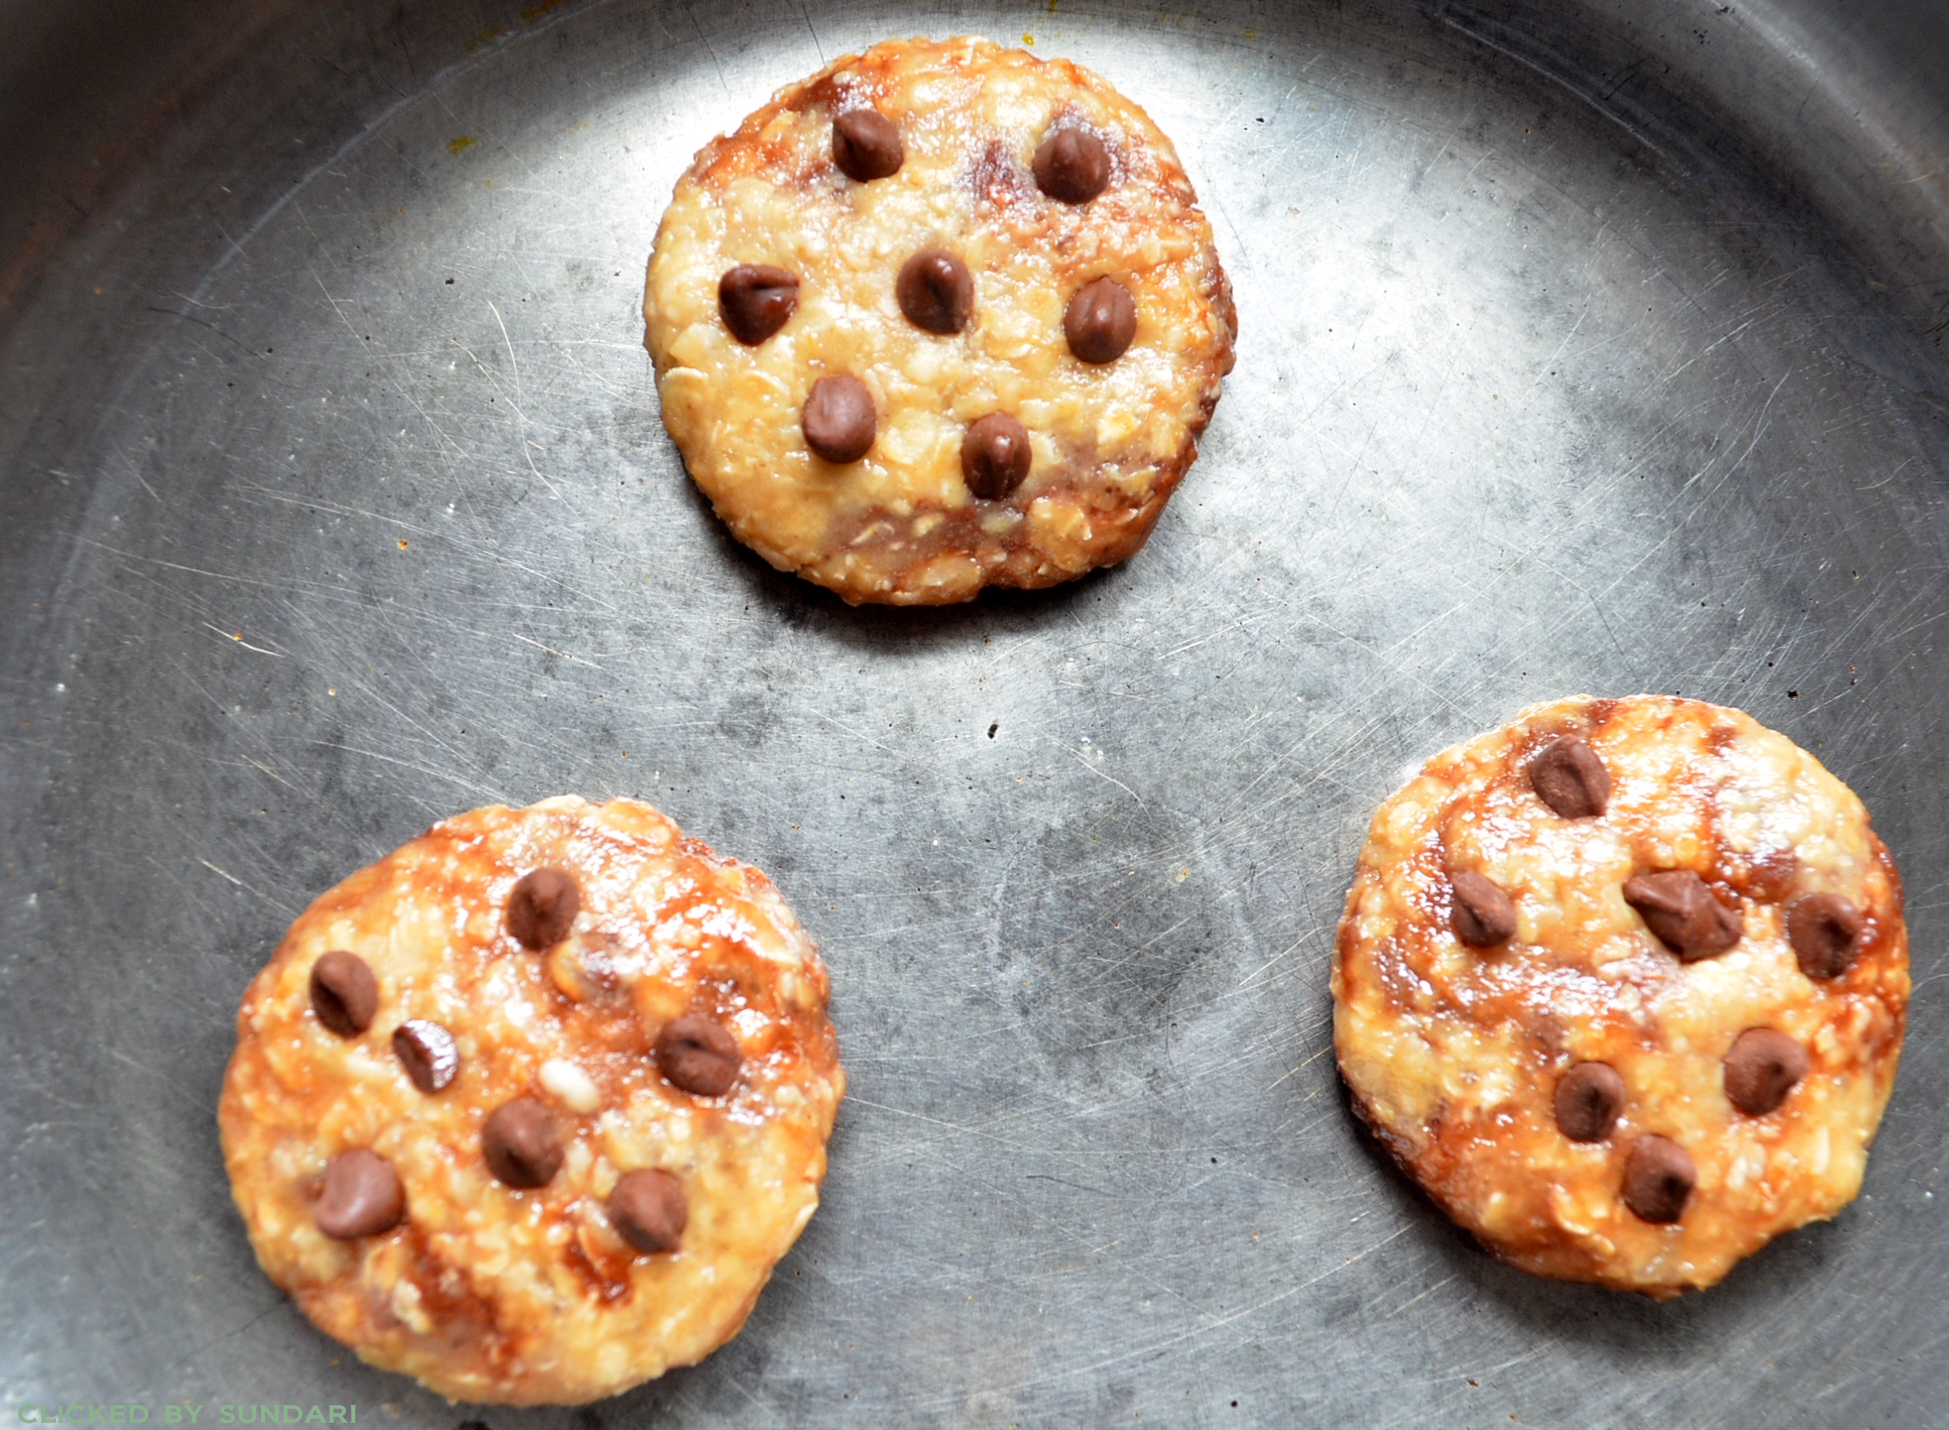 Eggless Oatmeal Cookies Recipe - Prepare the pan and arrange the cookies on the pan